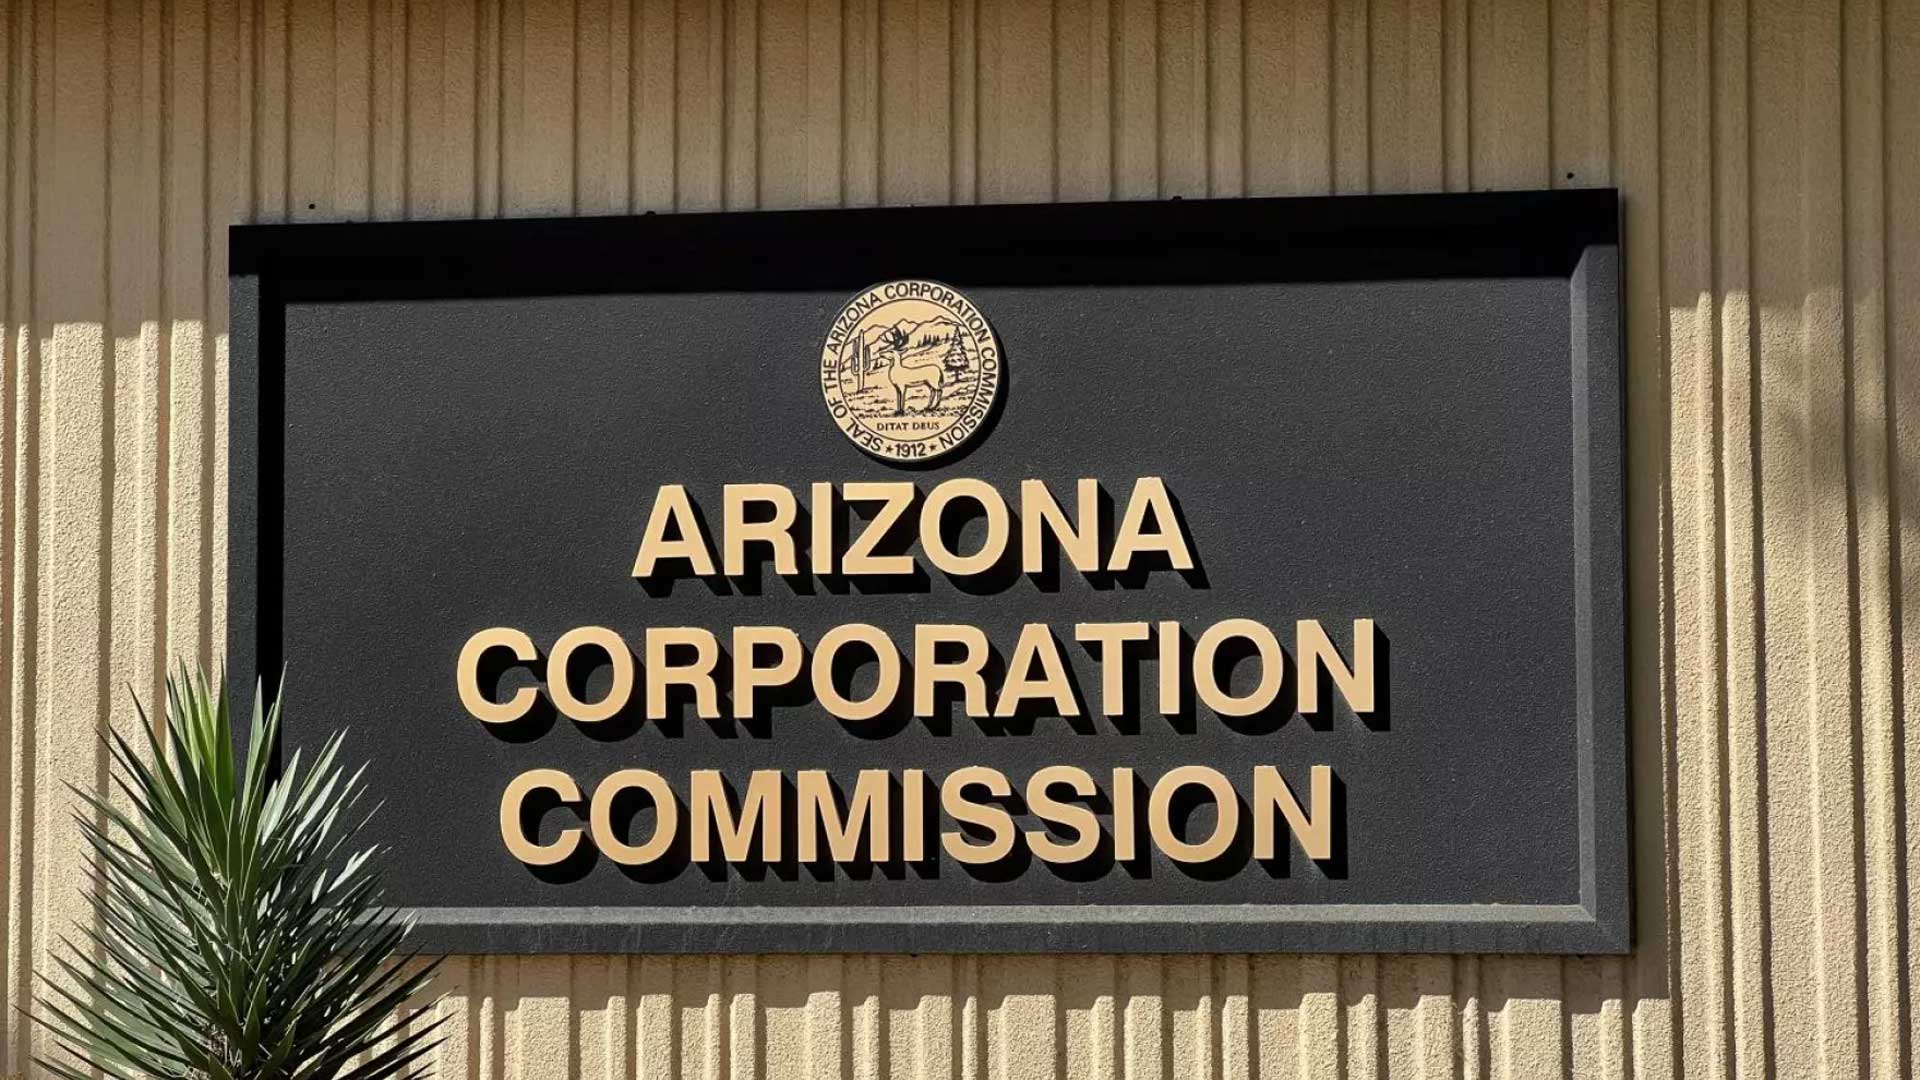 Arizona Corporation Commission building in downtown Phoenix.